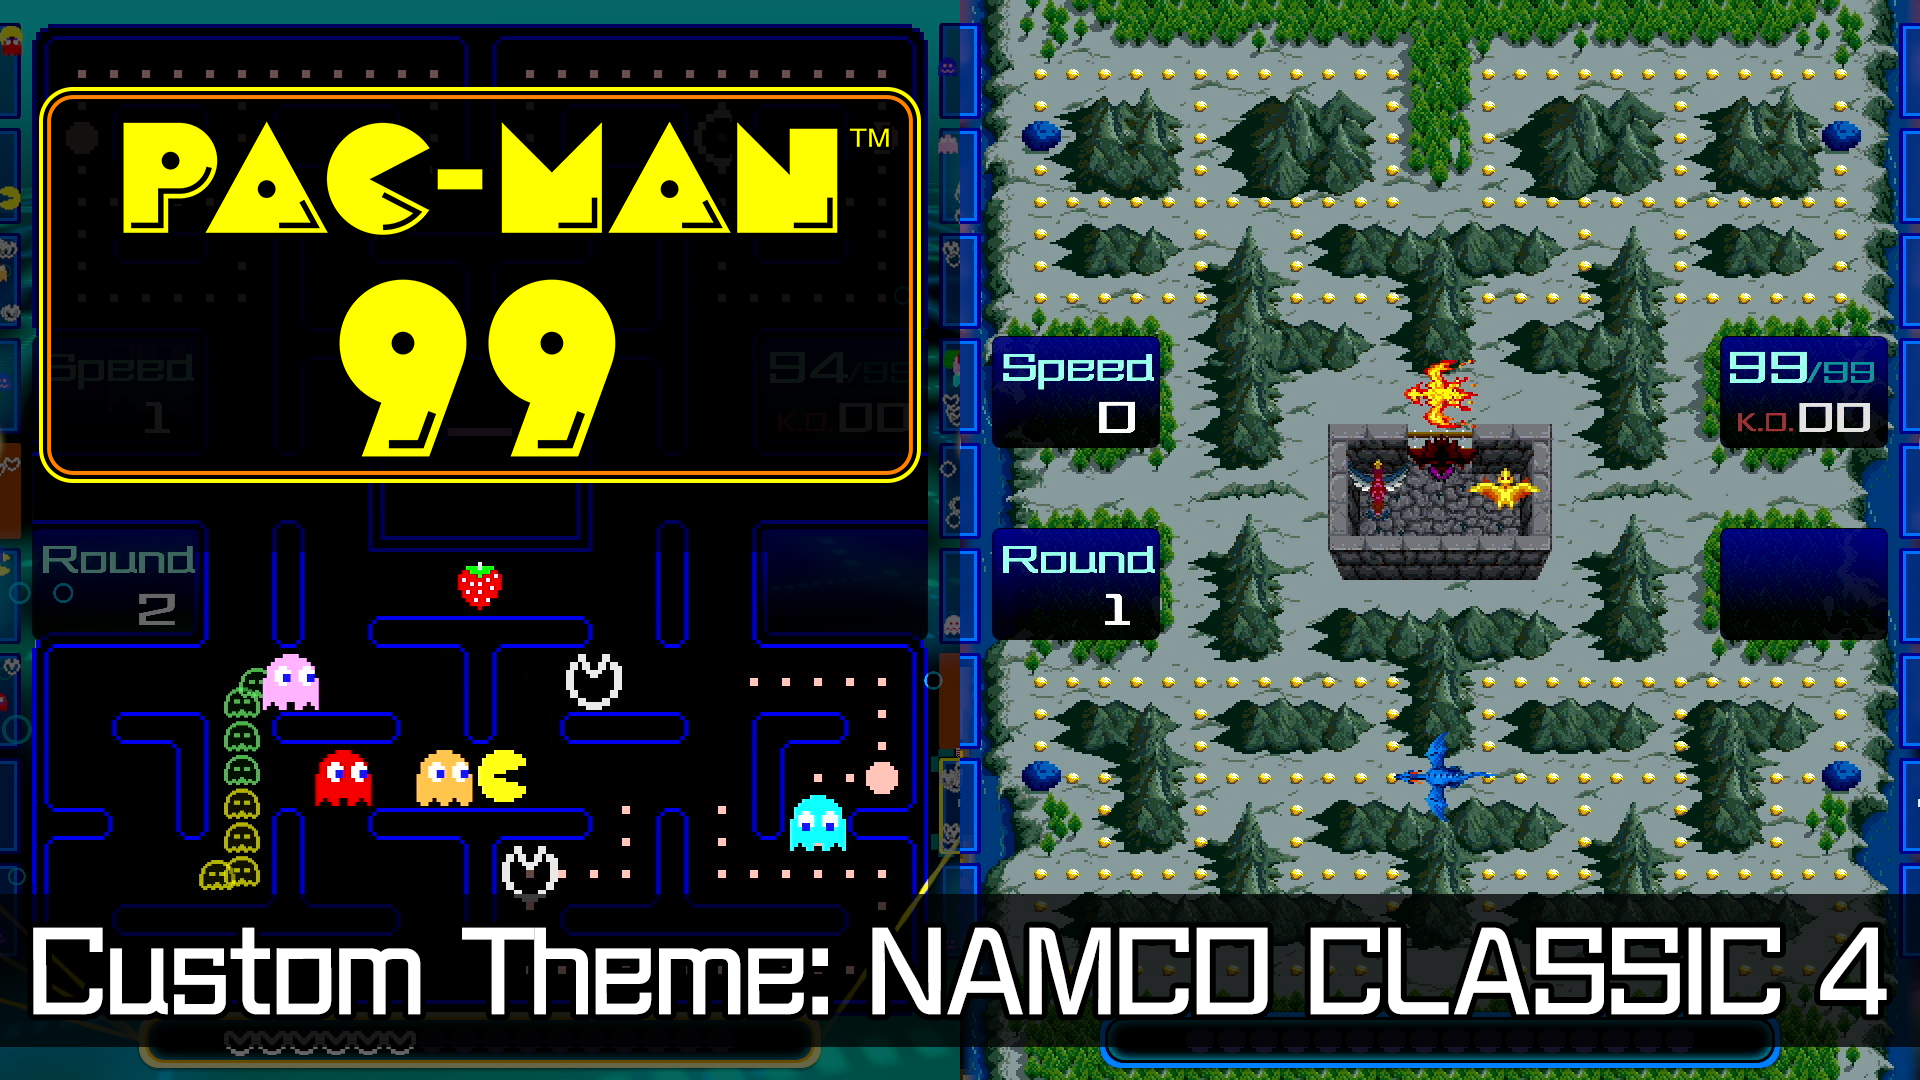 PAC-MAN 99 Custom Theme: NAMCO CLASSIC 4